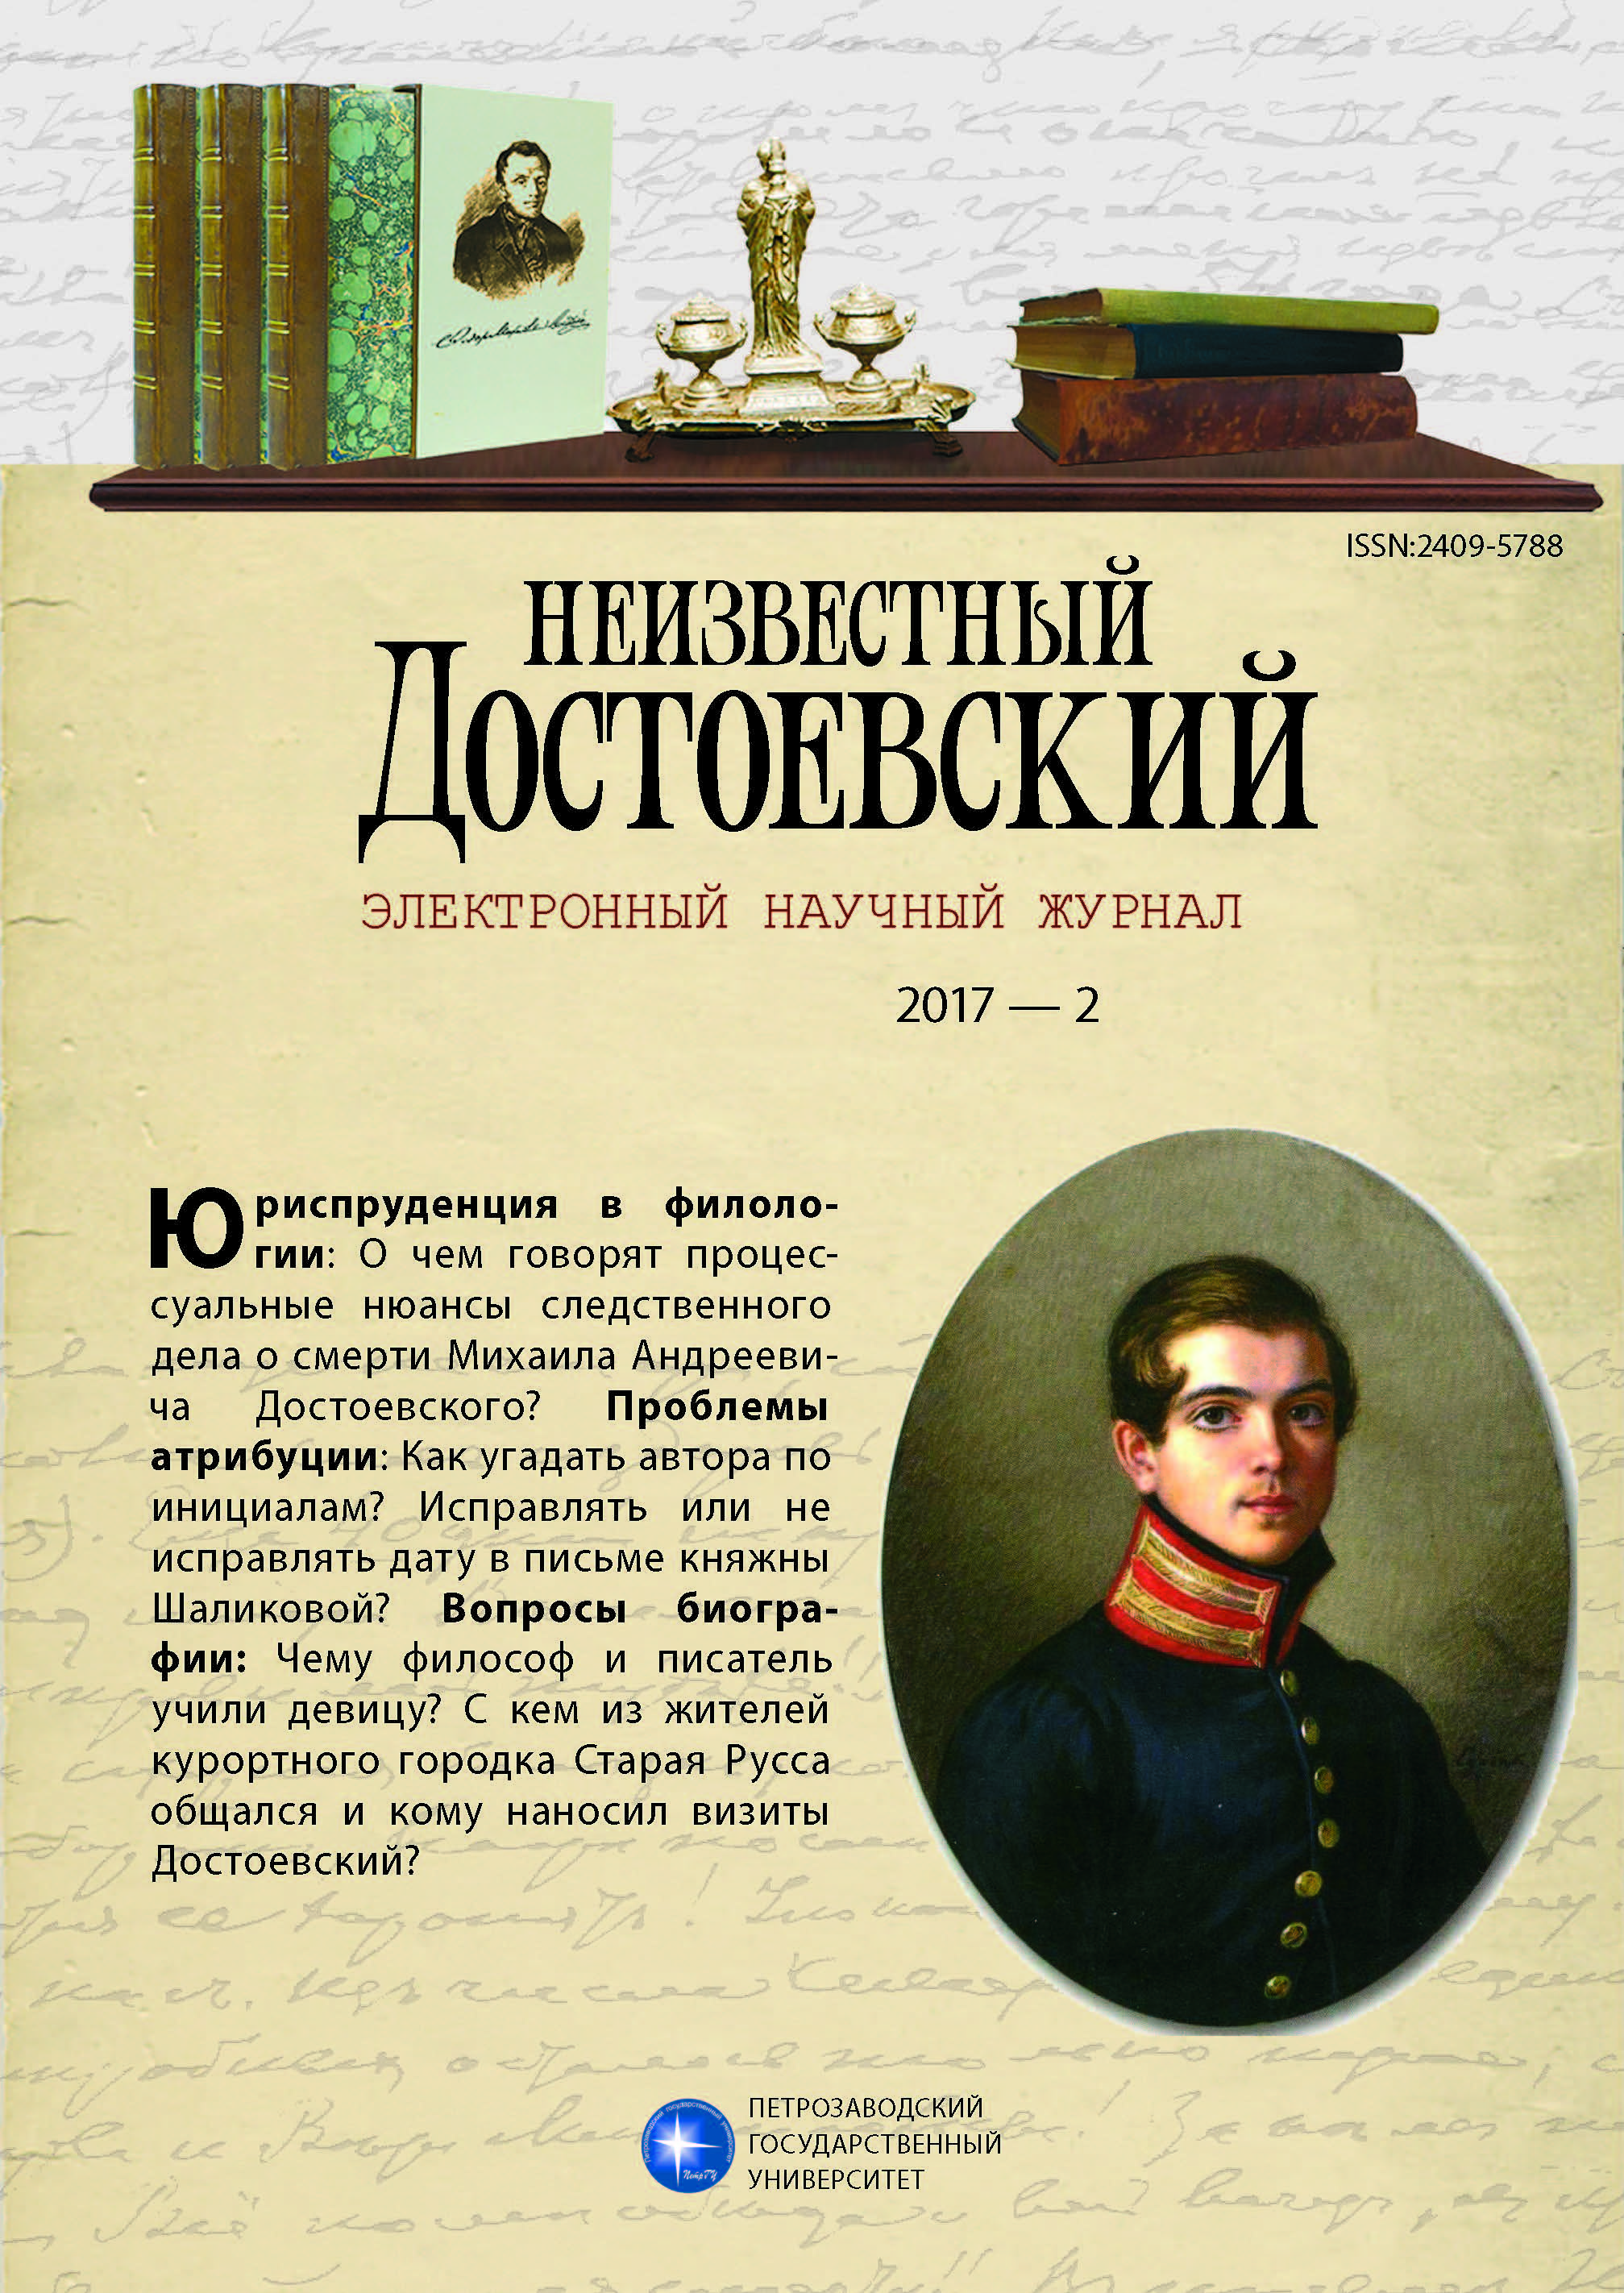 The Neighbors of Dostoevsky in Staraya Russa Cover Image